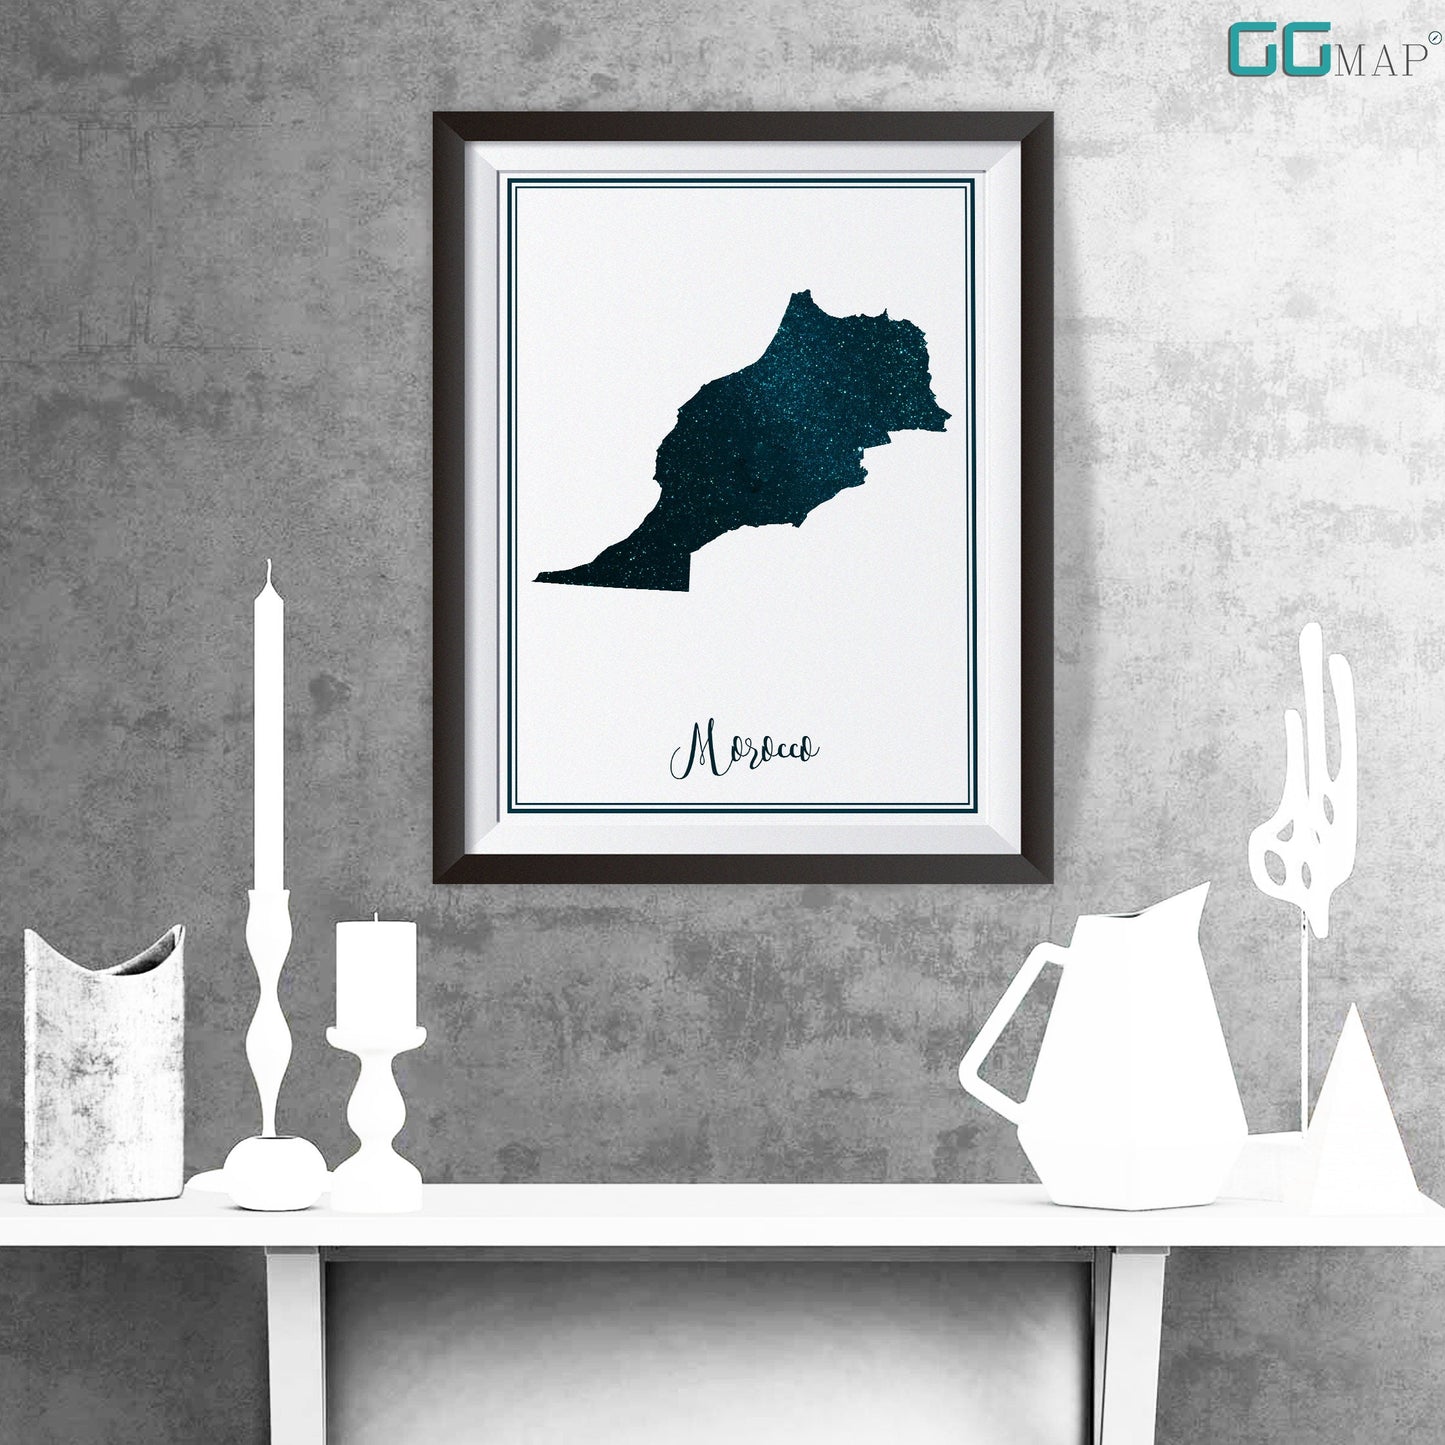 MOROCCO map - Morocco stars map - Travel poster - Home Decor - Wall decor - Office map - Morocco gift - GeoGIS studio